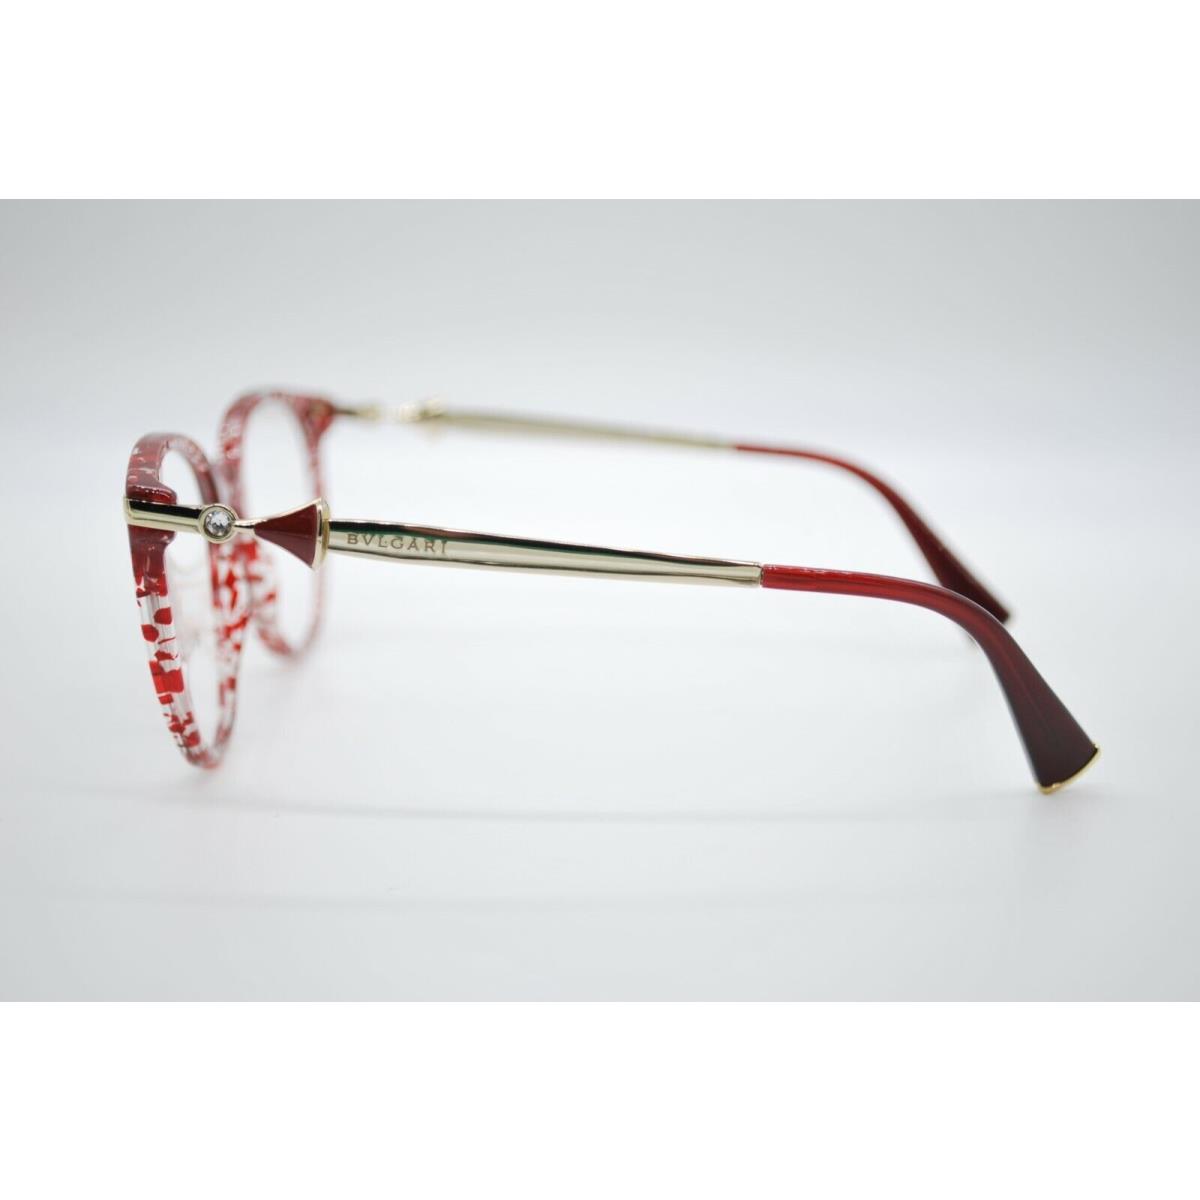 Bvlgari eyeglasses  - Red Frame 2